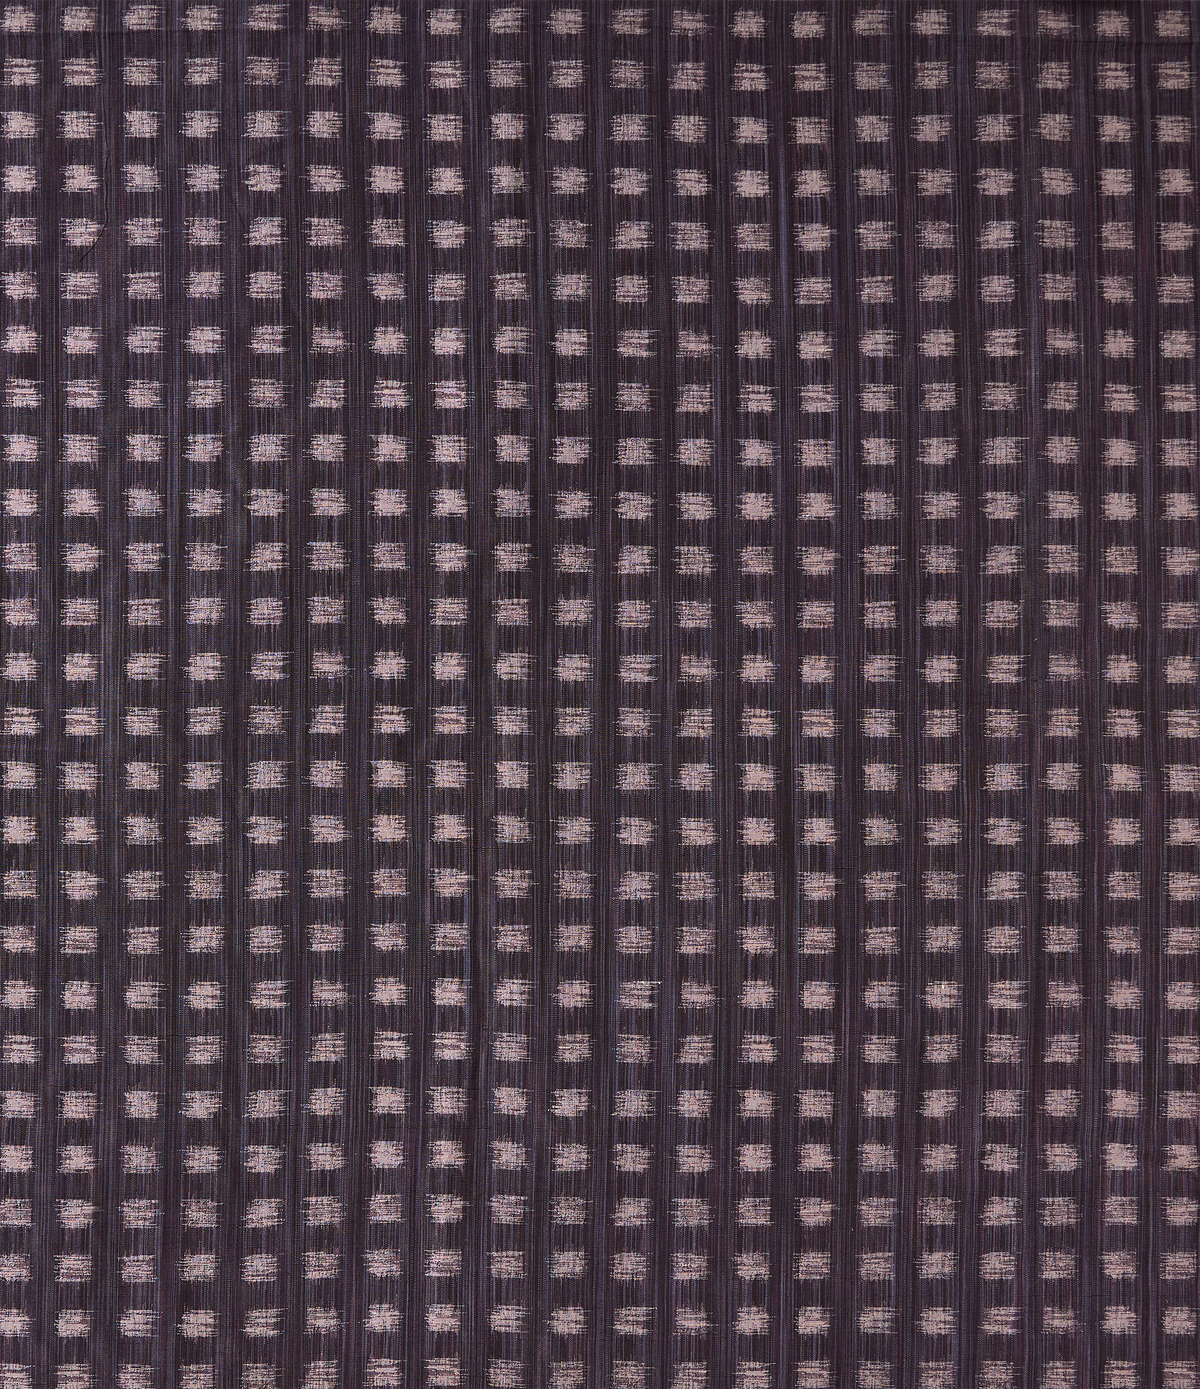 Gridded Ikat Fabric in Dark Plum